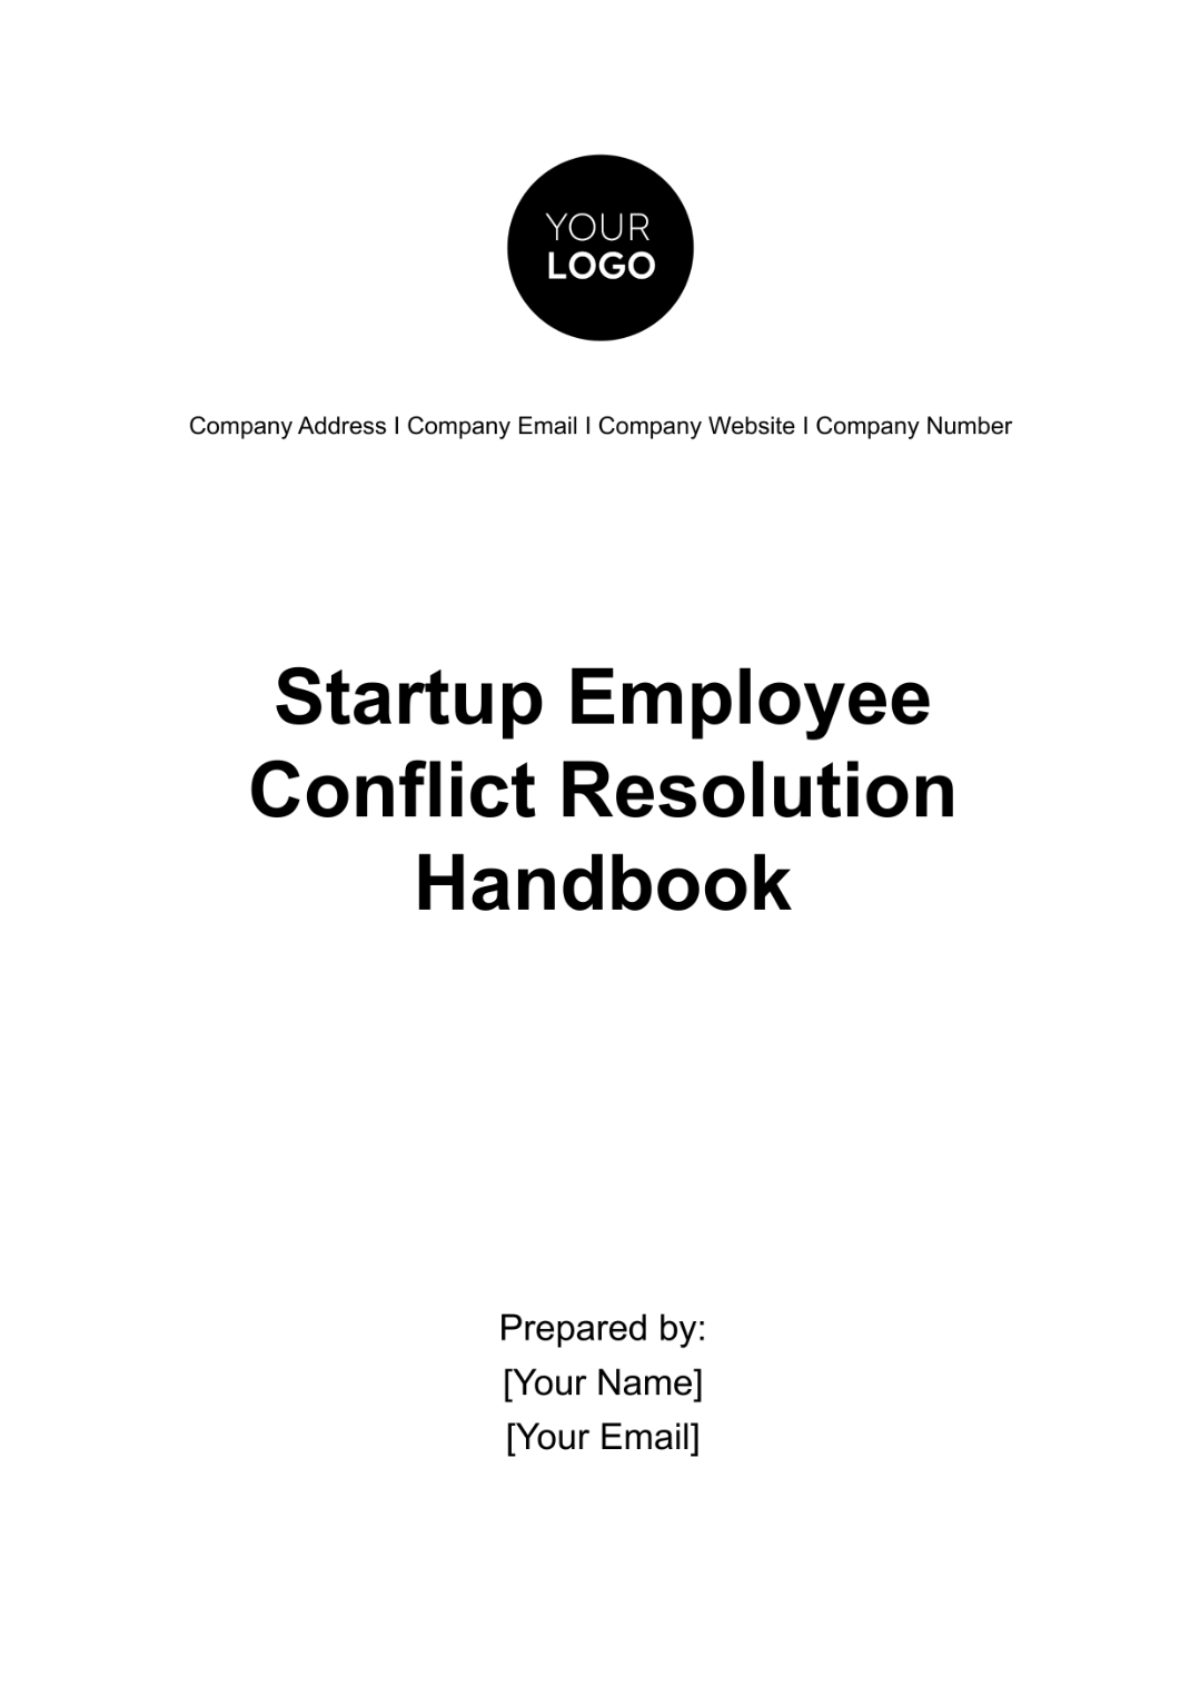 Startup Employee Conflict Resolution Handbook Template